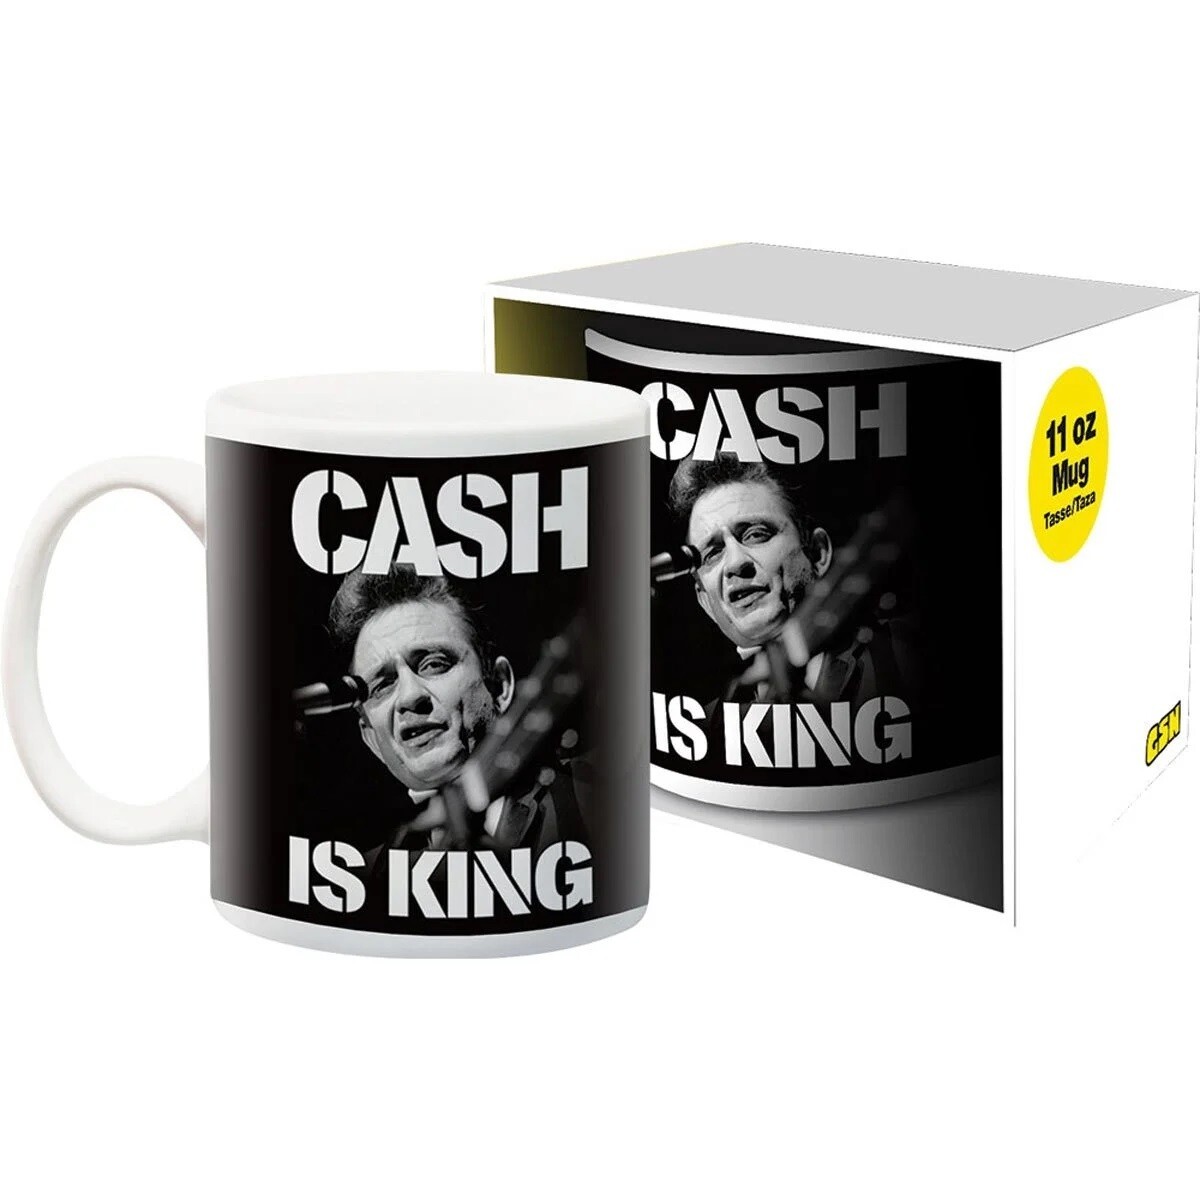 Johnny Cash "Cash is King" 11 Oz. Ceramic Mug